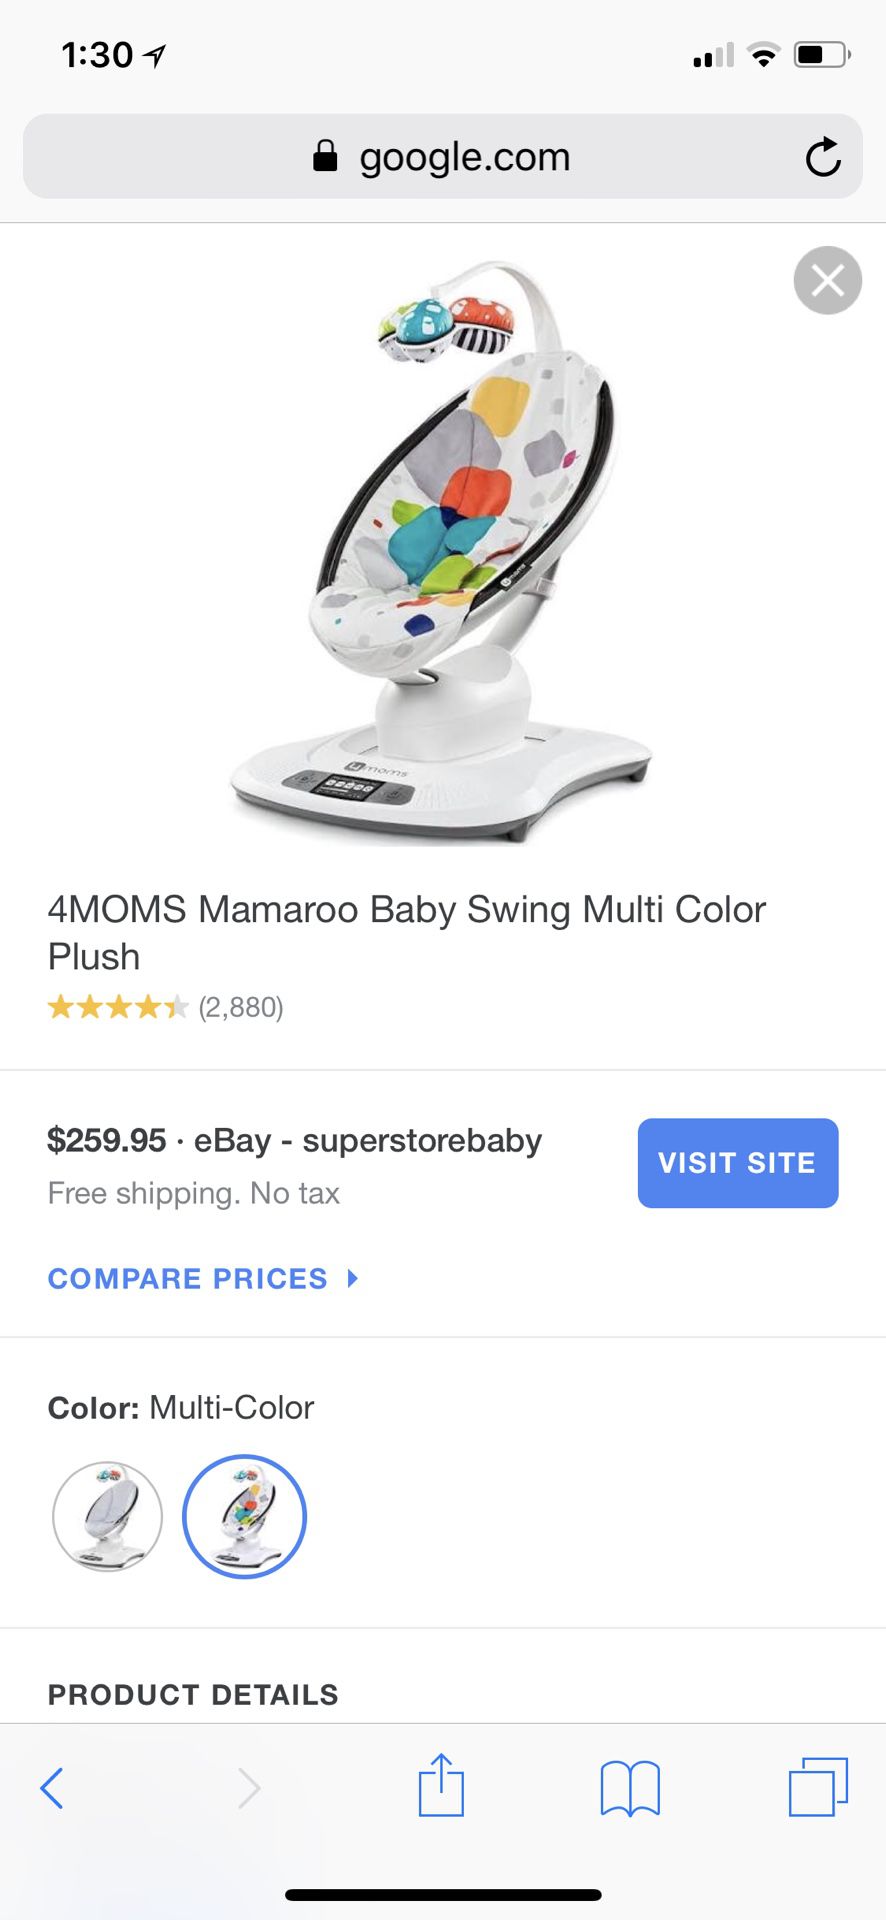 4MOMS Mamaroo Baby Swing